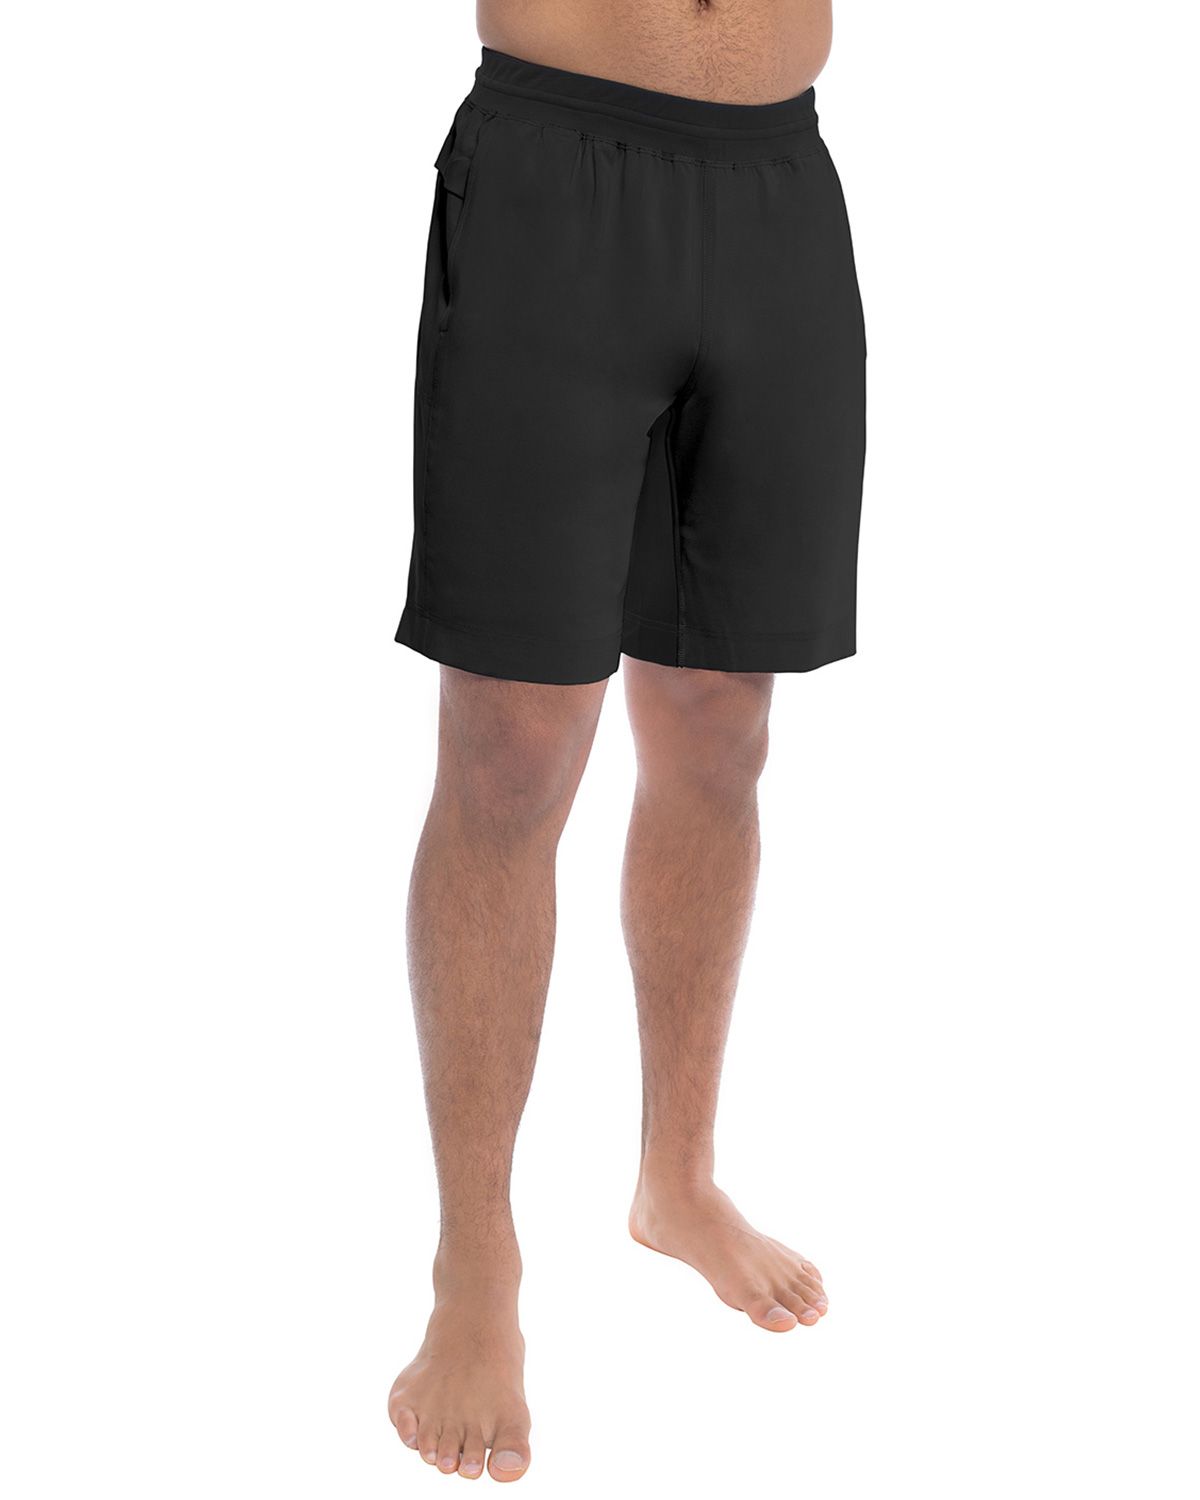 Men S Shorts Inseam Chart